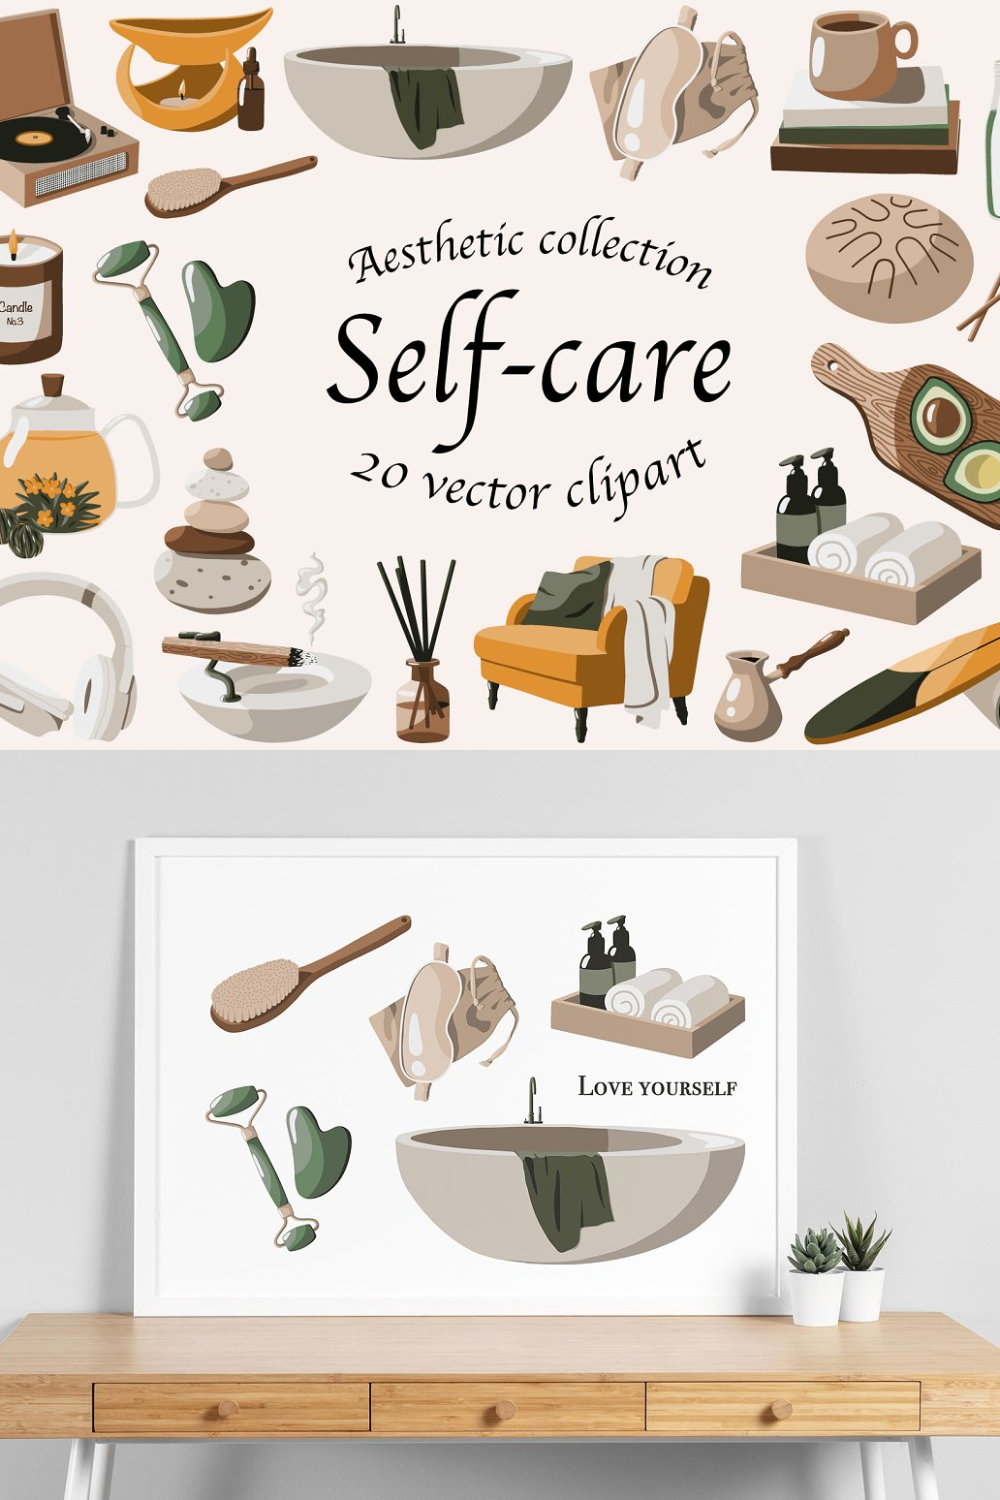 Self-Care Vector Clipart - Pinterest.